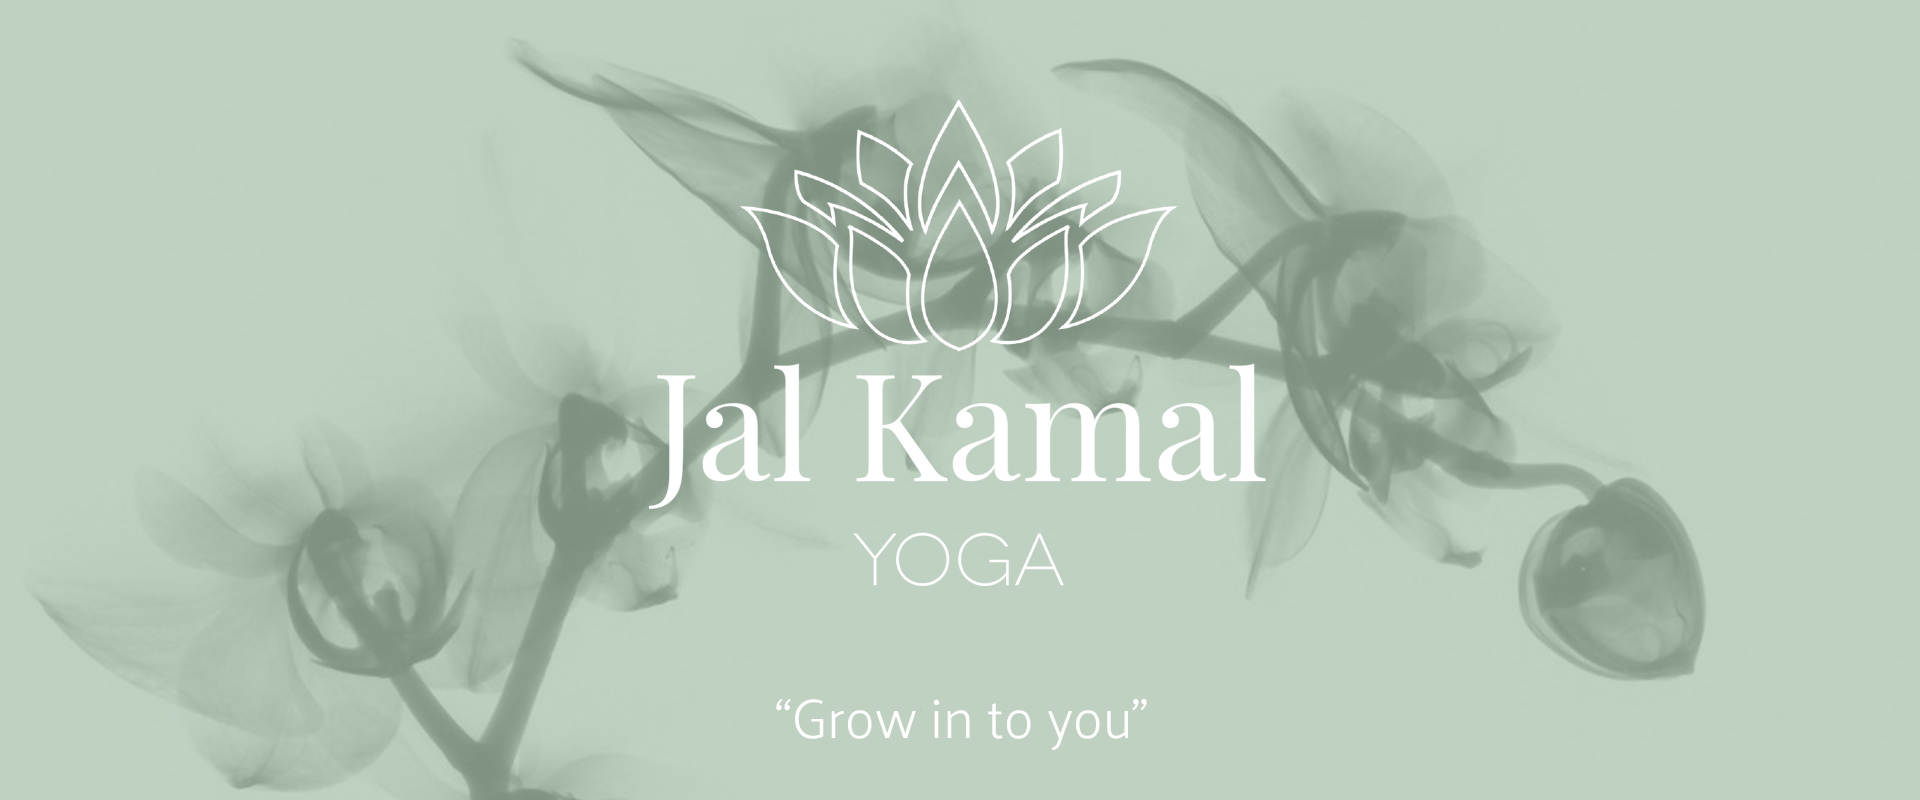 Jal-Kamal-Yoga-Header